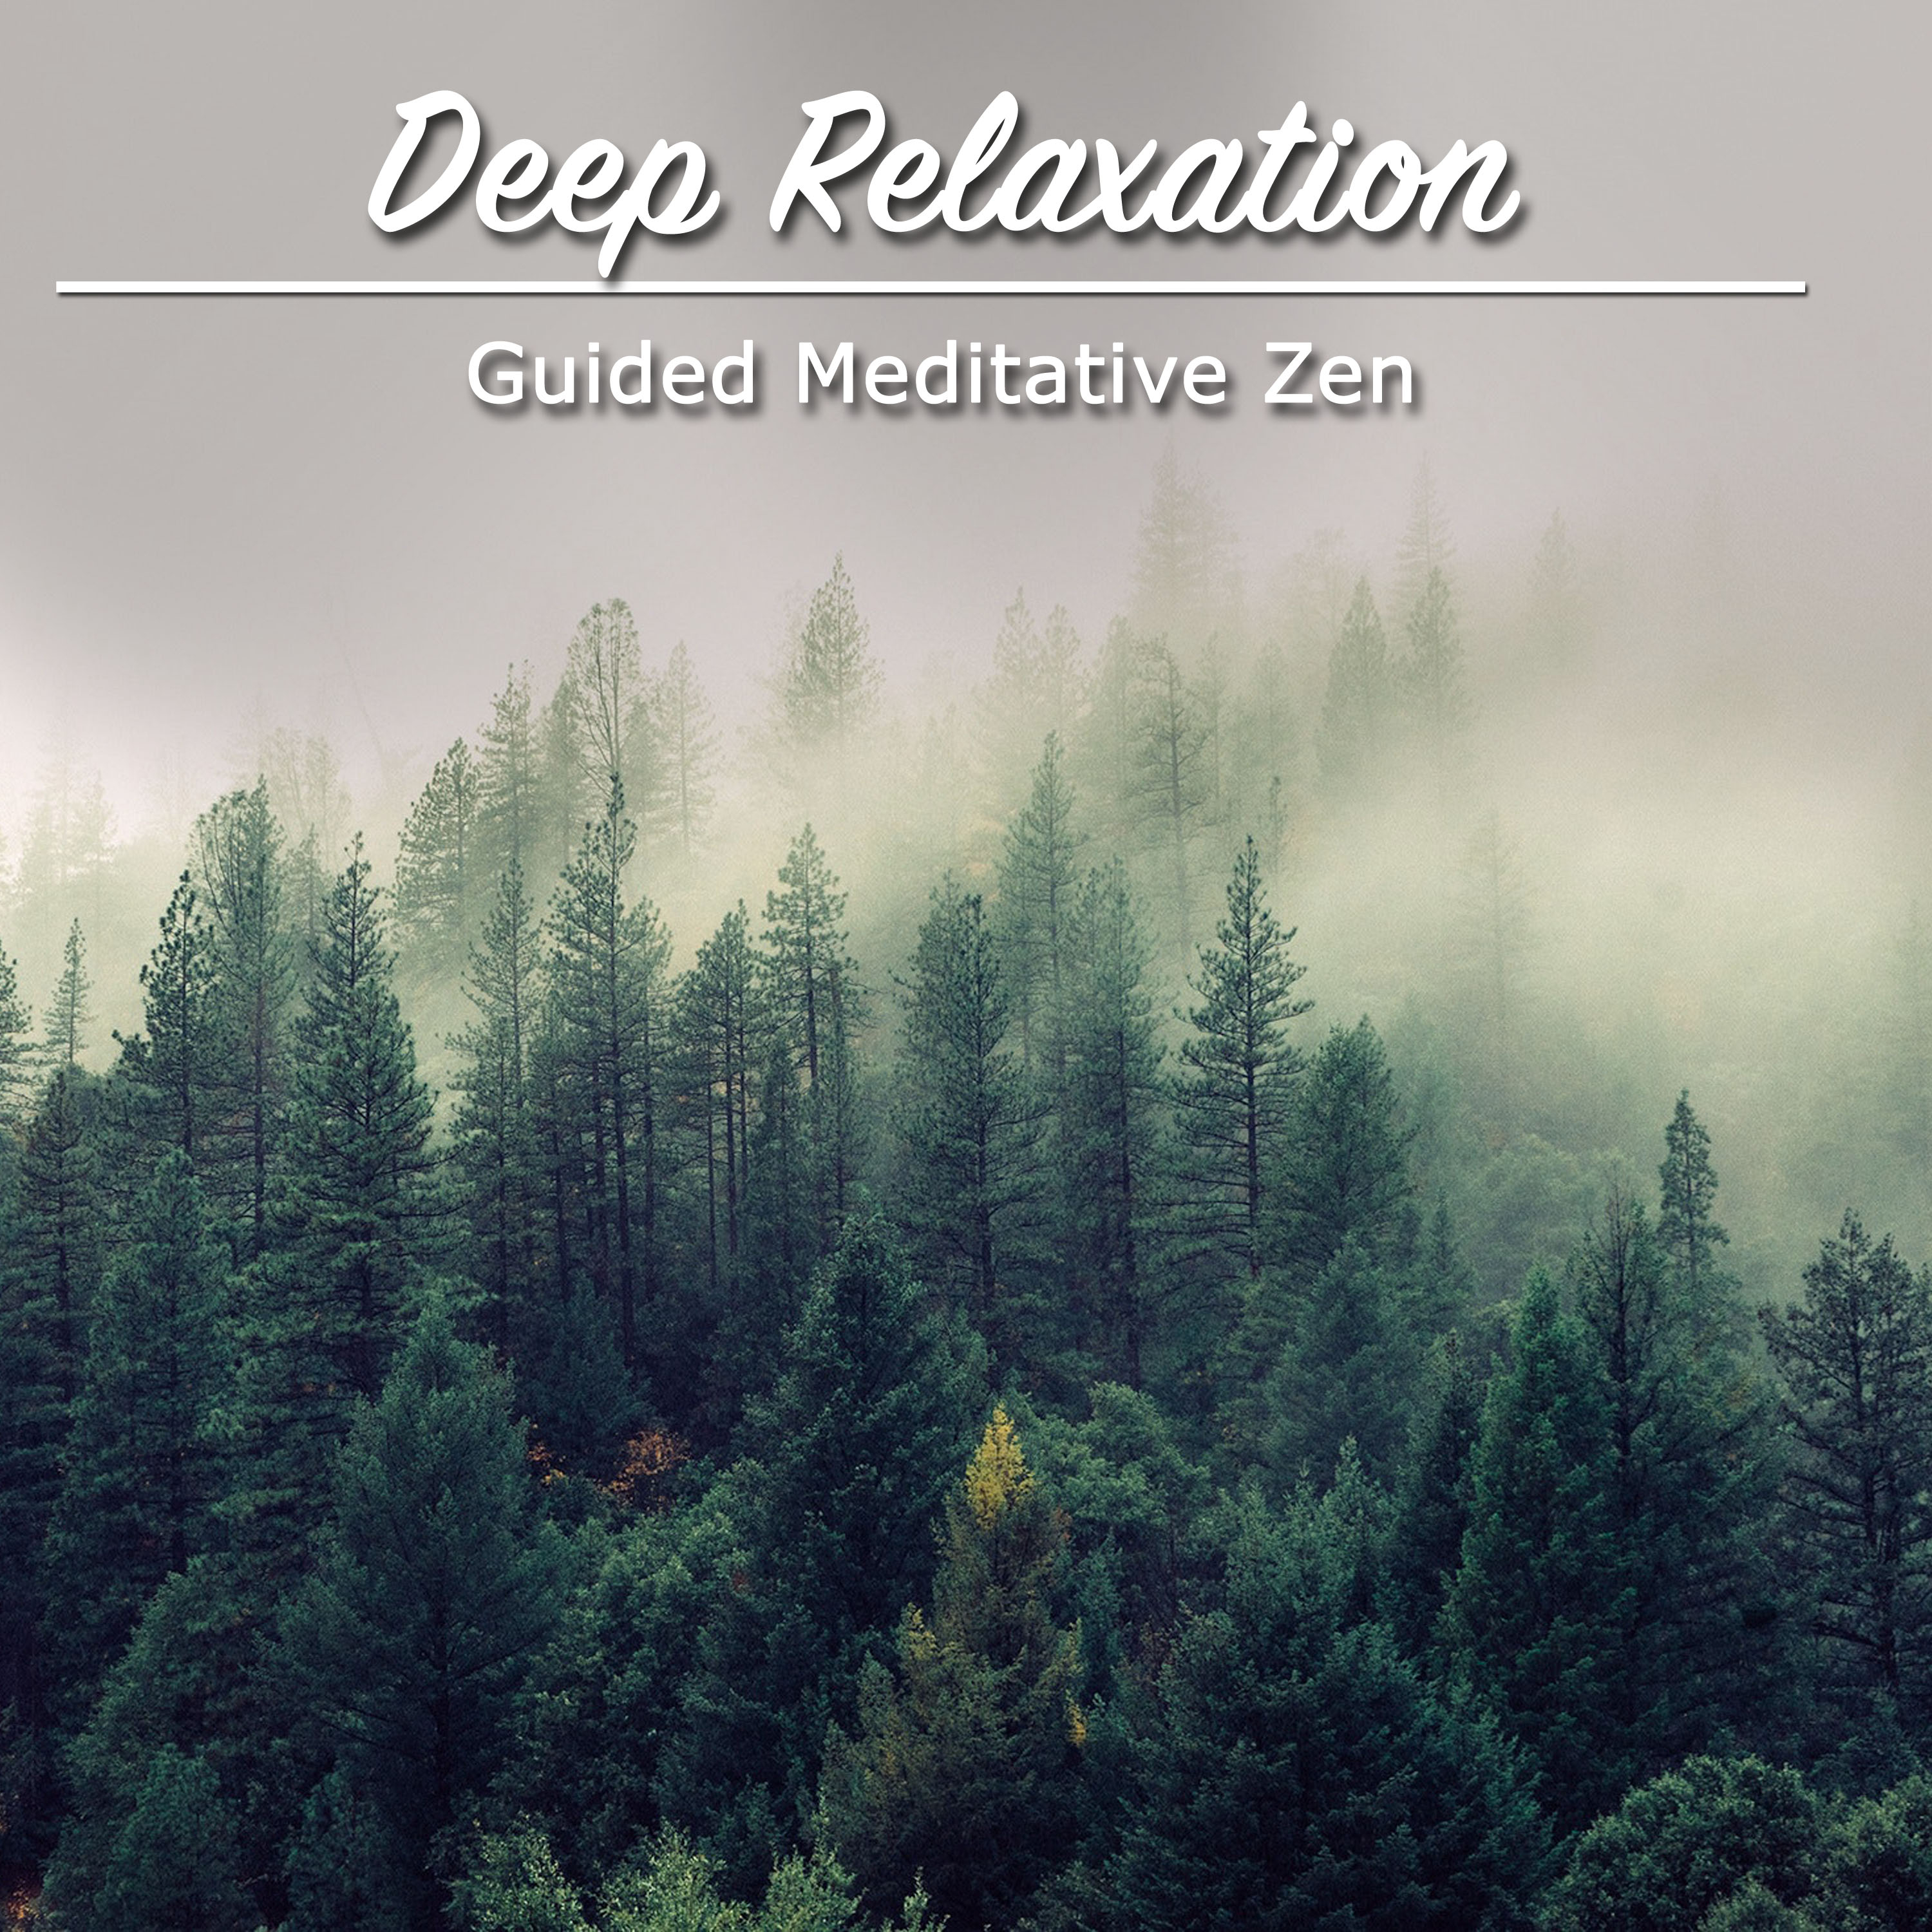 15 Guided Meditative Zen Songs: Deep Relaxation